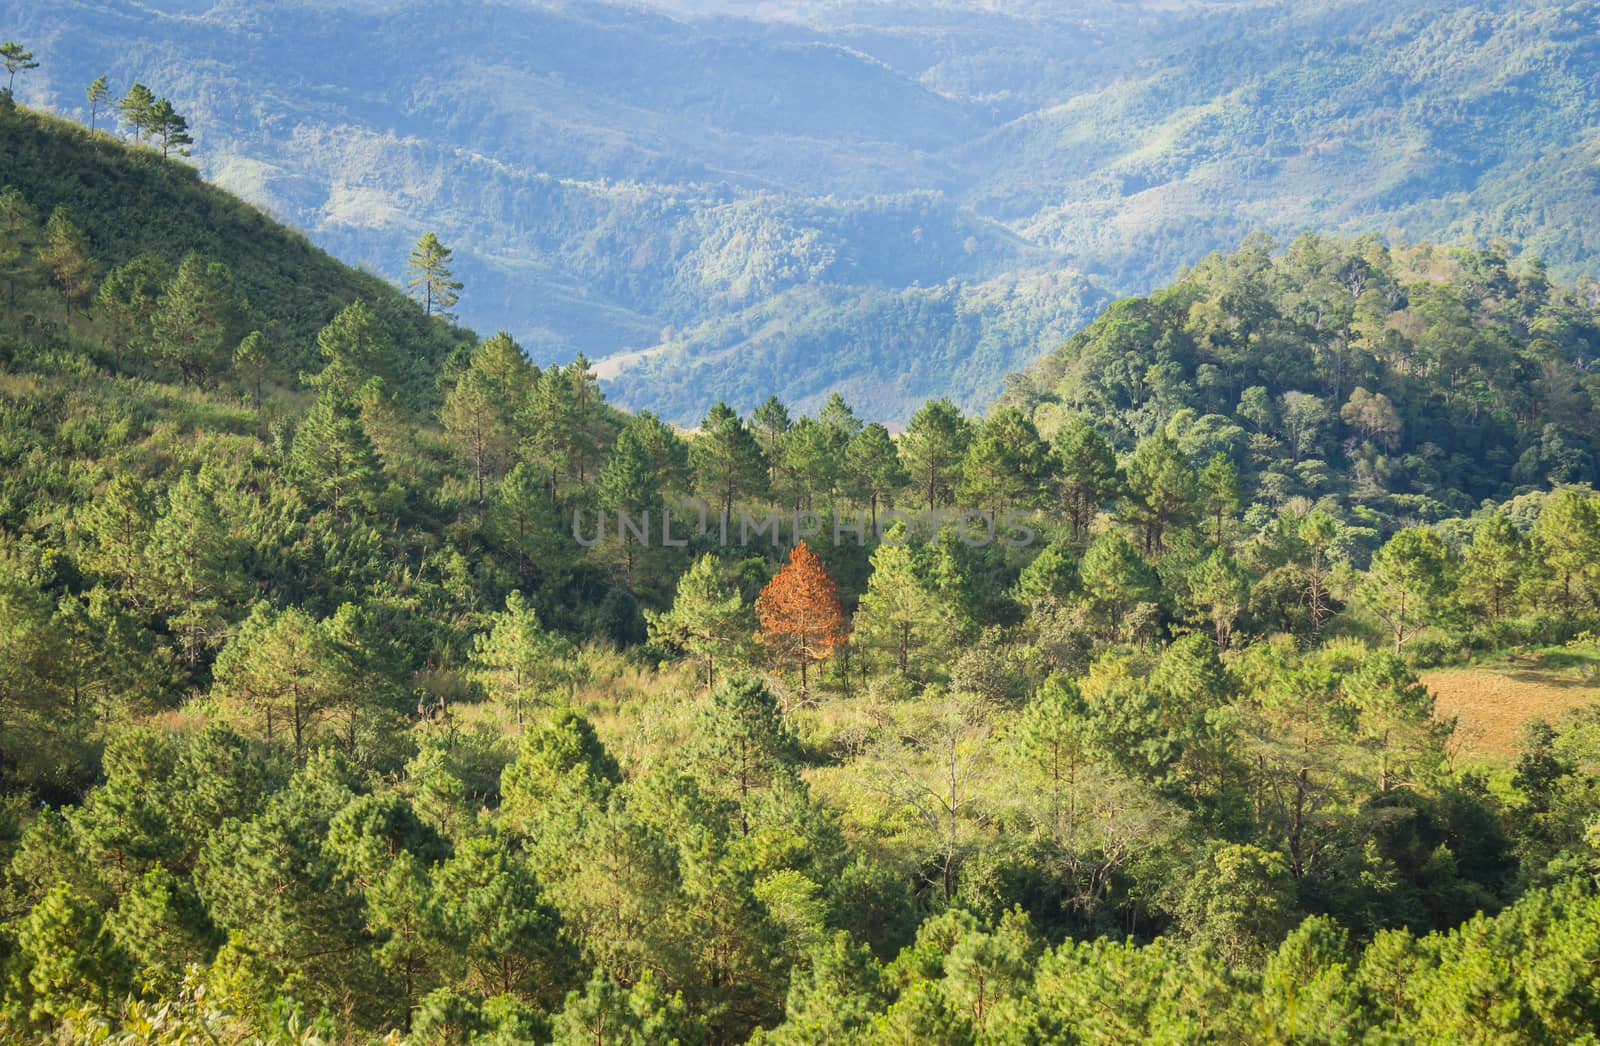 Outstanding Dried Tree Among Green Tree Forest with Mountain Background. Outstanding Dried Tree at Lan Hin Lan Pee View Point Phu Langka National Park Phayao Northern 
Thailand Travel